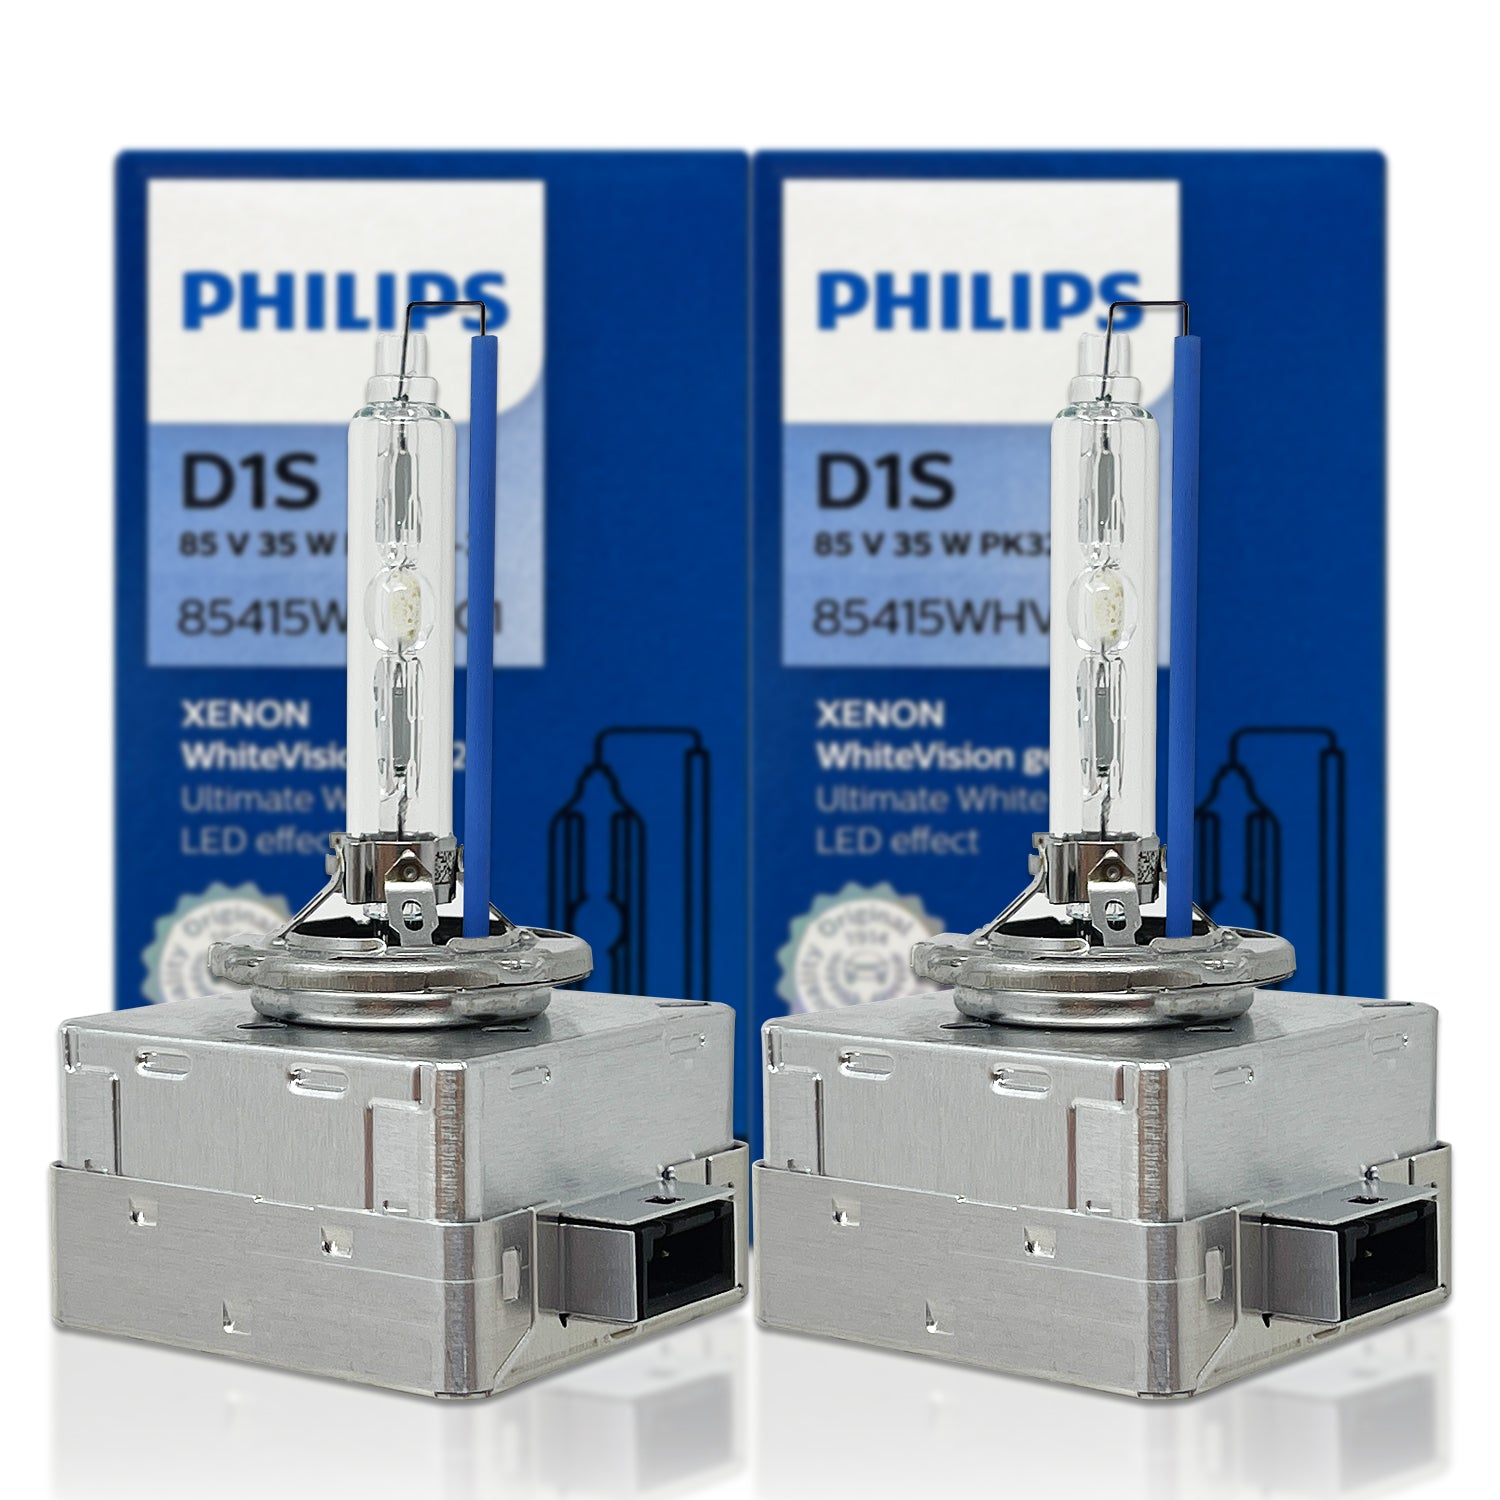 Philips D1s HID Xenon 5000k Bulbs, 85415WHV2